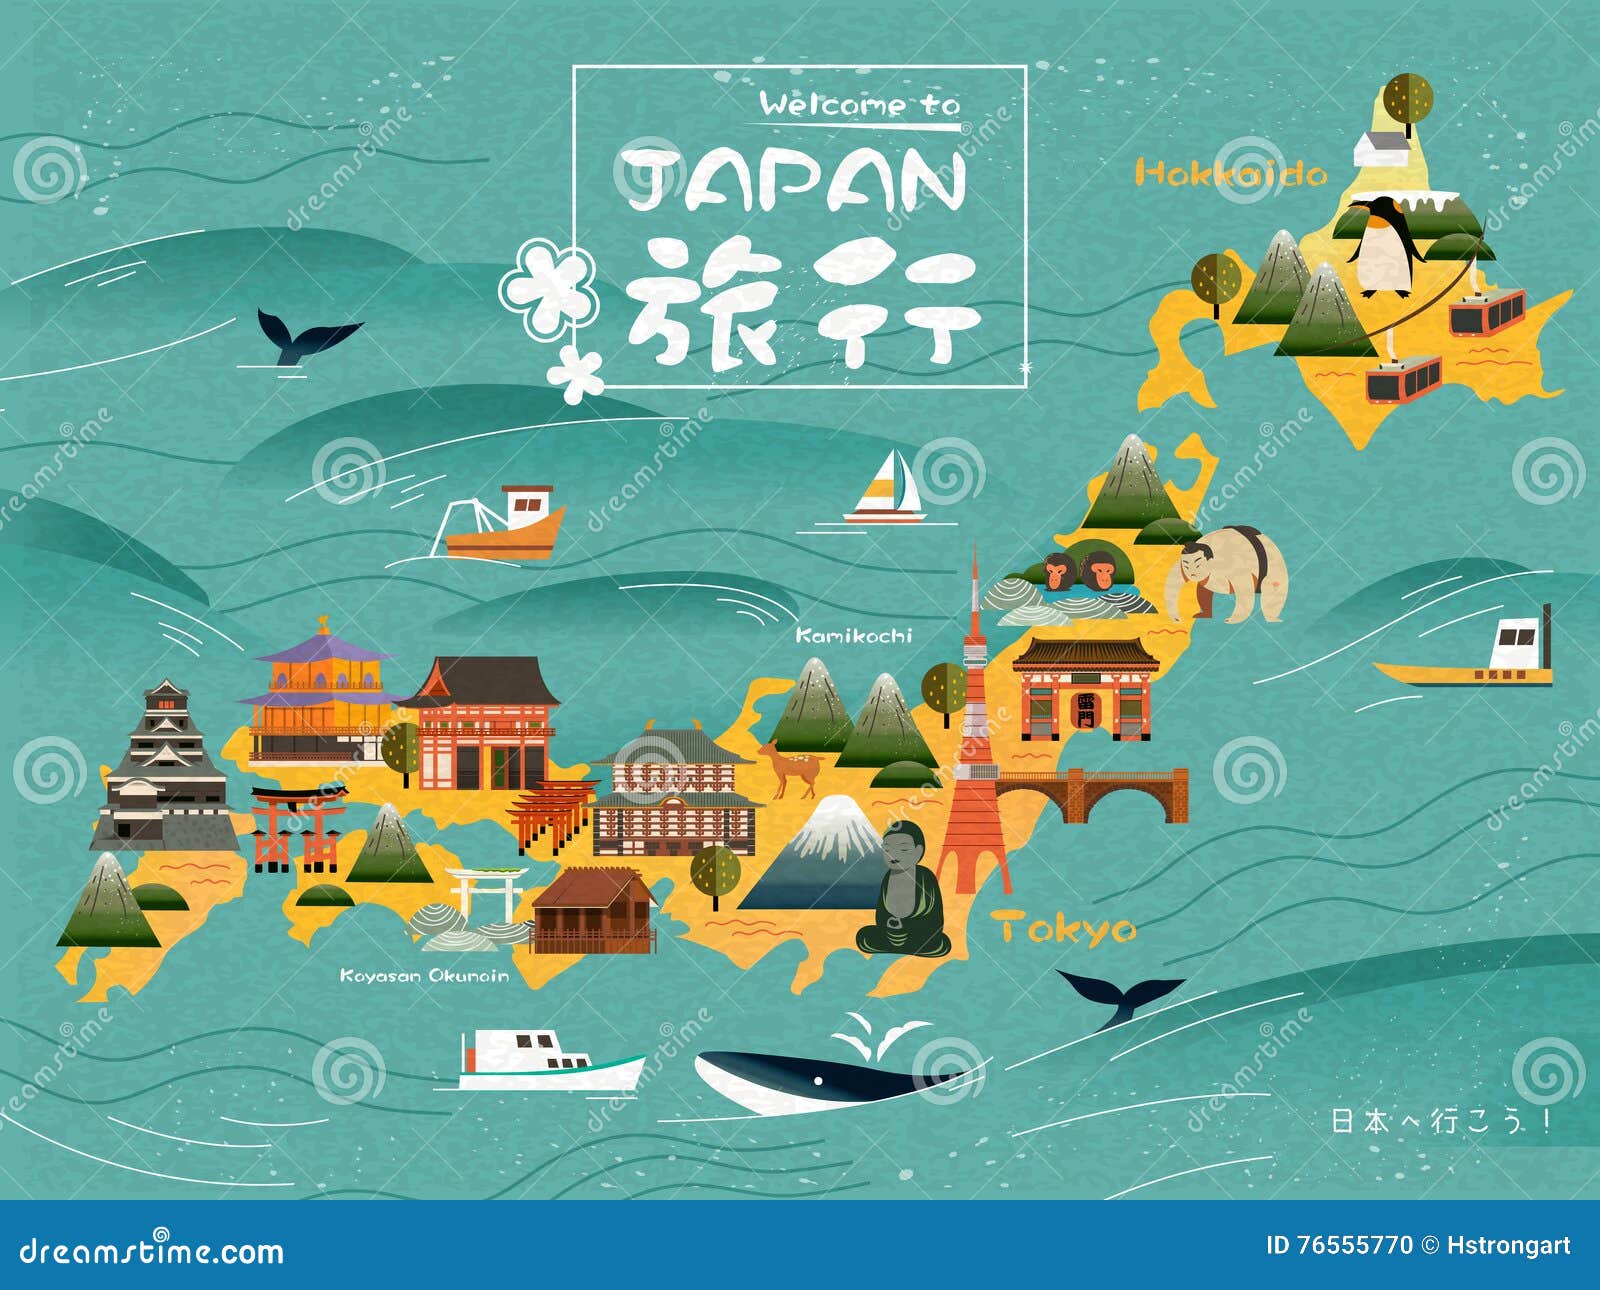 Japan travel map stock illustration. Illustration of japan - 76555770